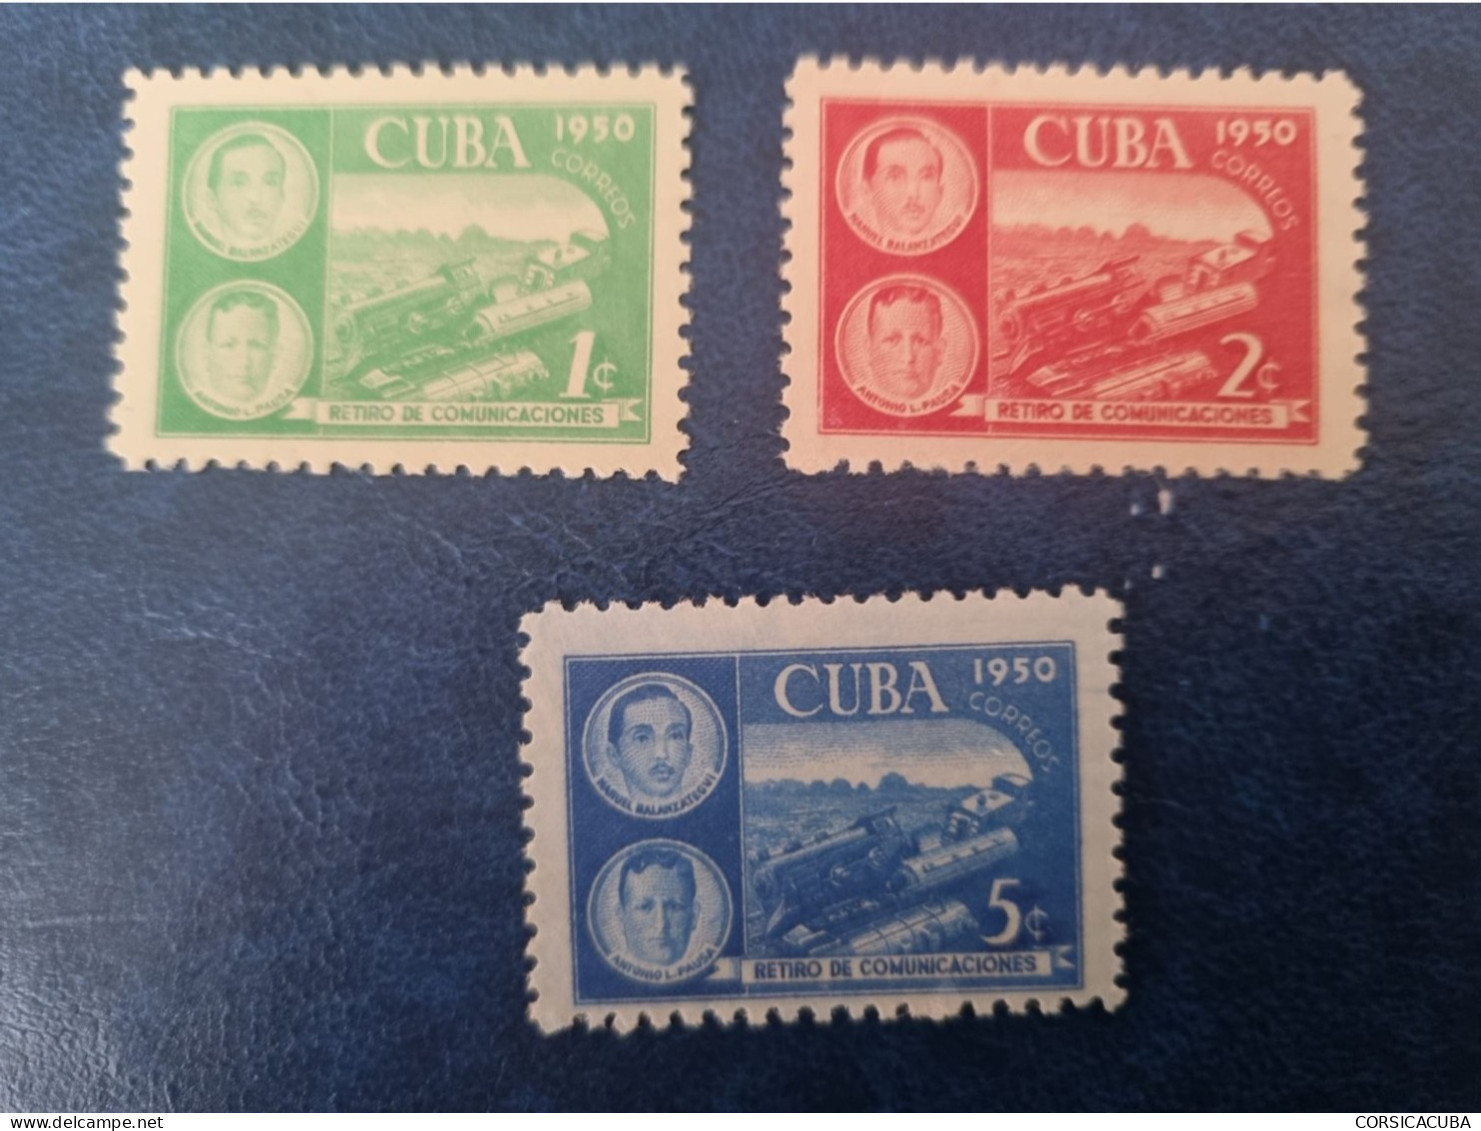 CUBA  NEUF  1950    RETIRO  DE  COMUNICACIONES  //  PARFAIT  ETAT  //  1er  CHOIX  // - Neufs